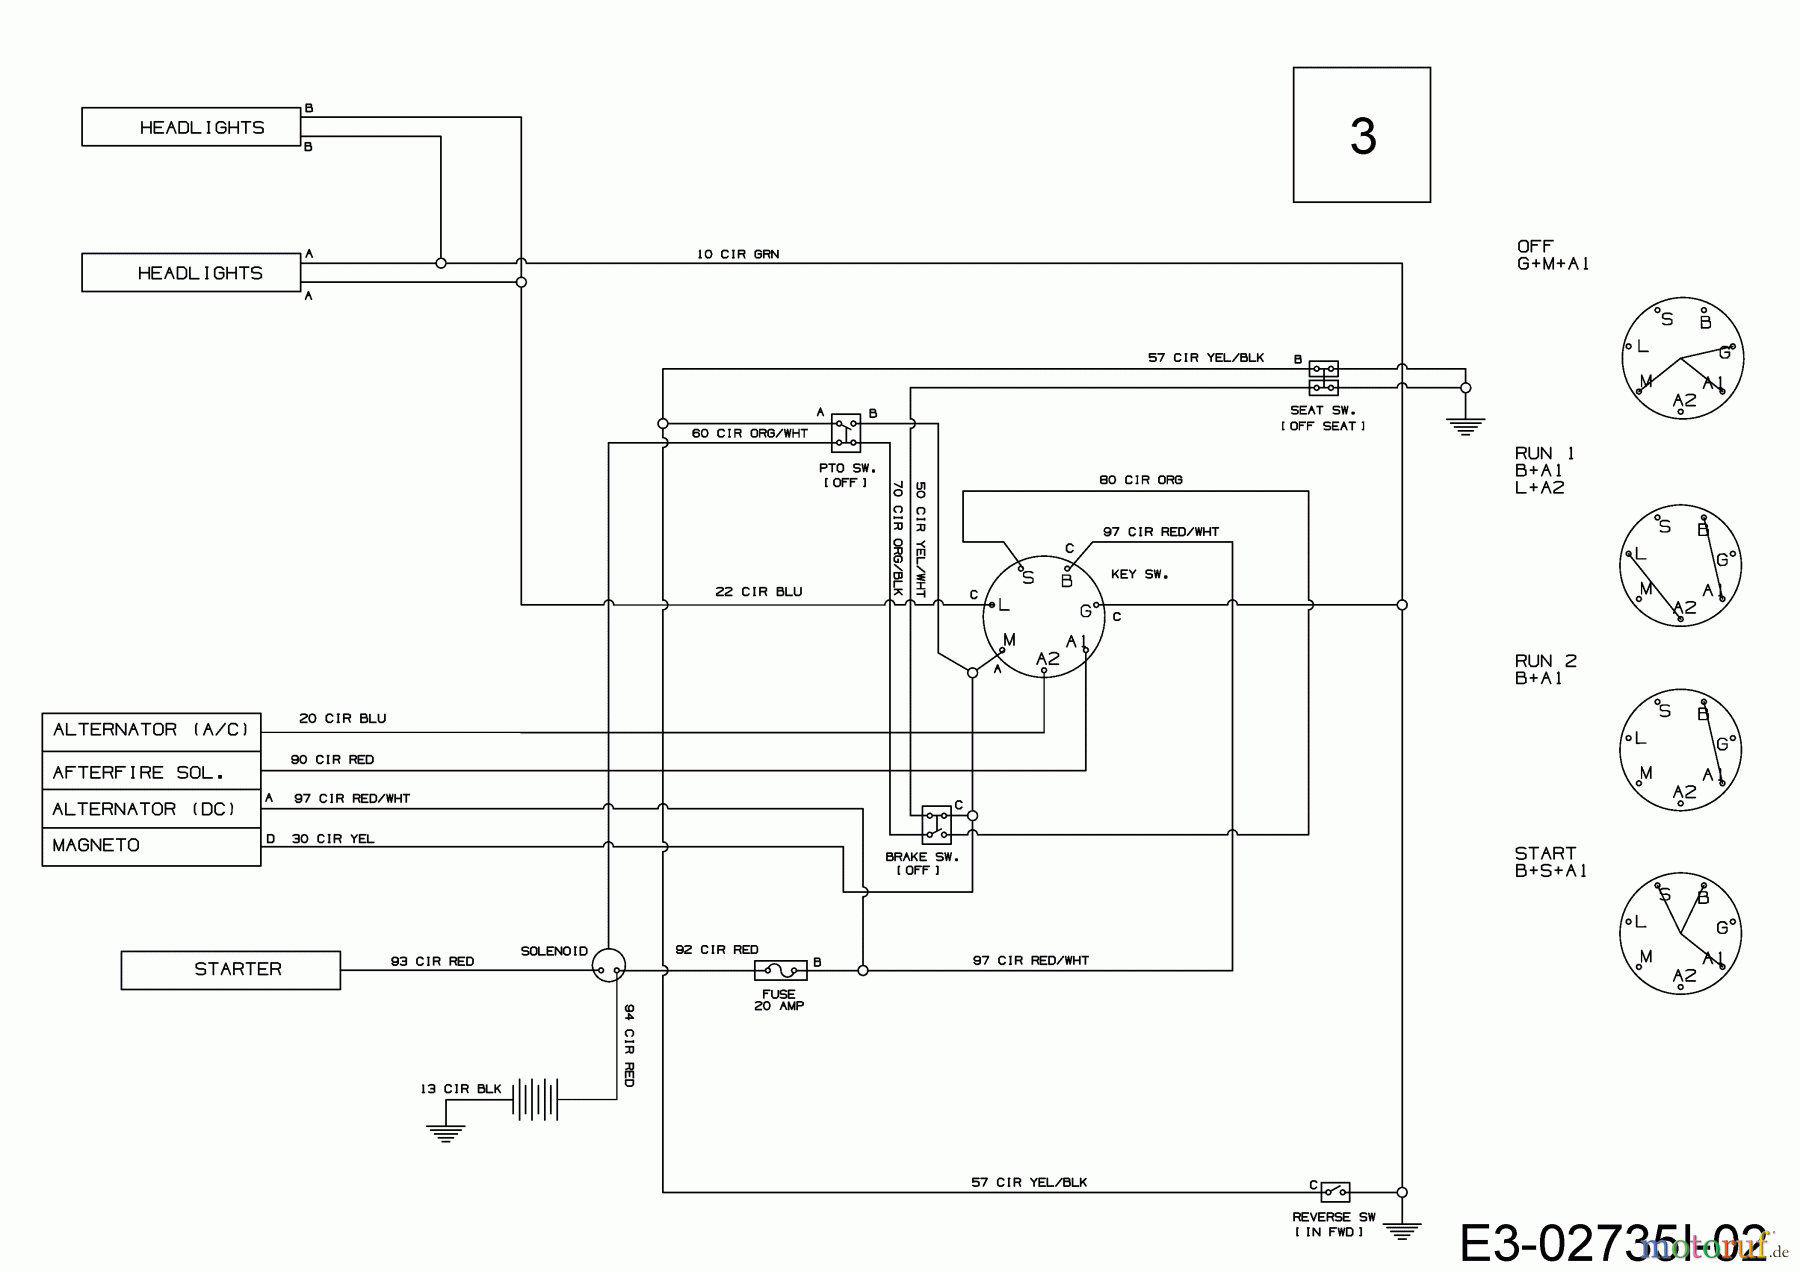  Tigara Lawn tractors TG 19/107 H 13IJ79KG649  (2019) Wiring diagram